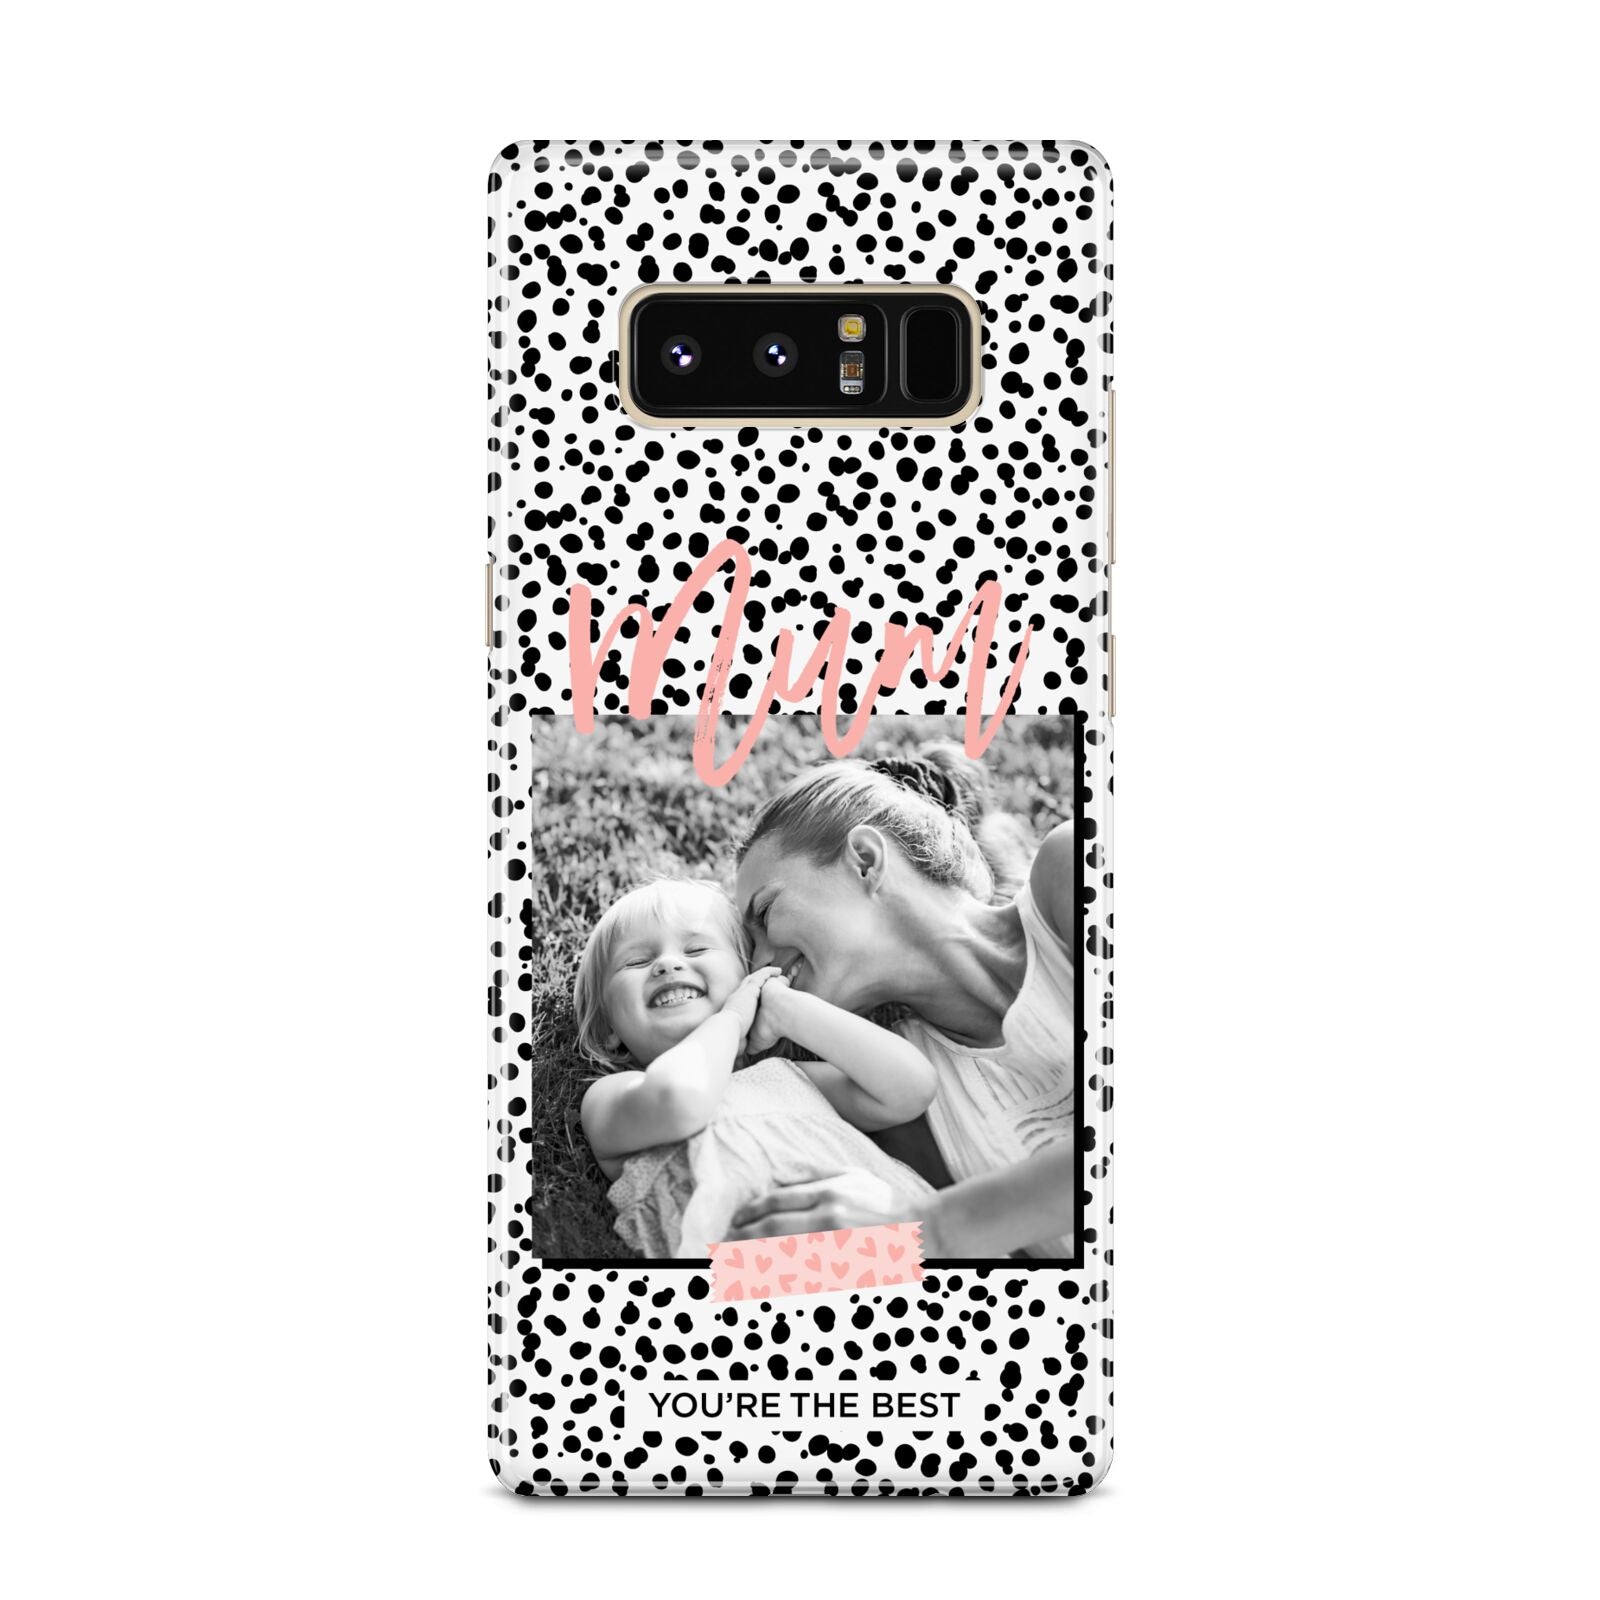 Polka Dot Mum Samsung Galaxy Note 8 Case